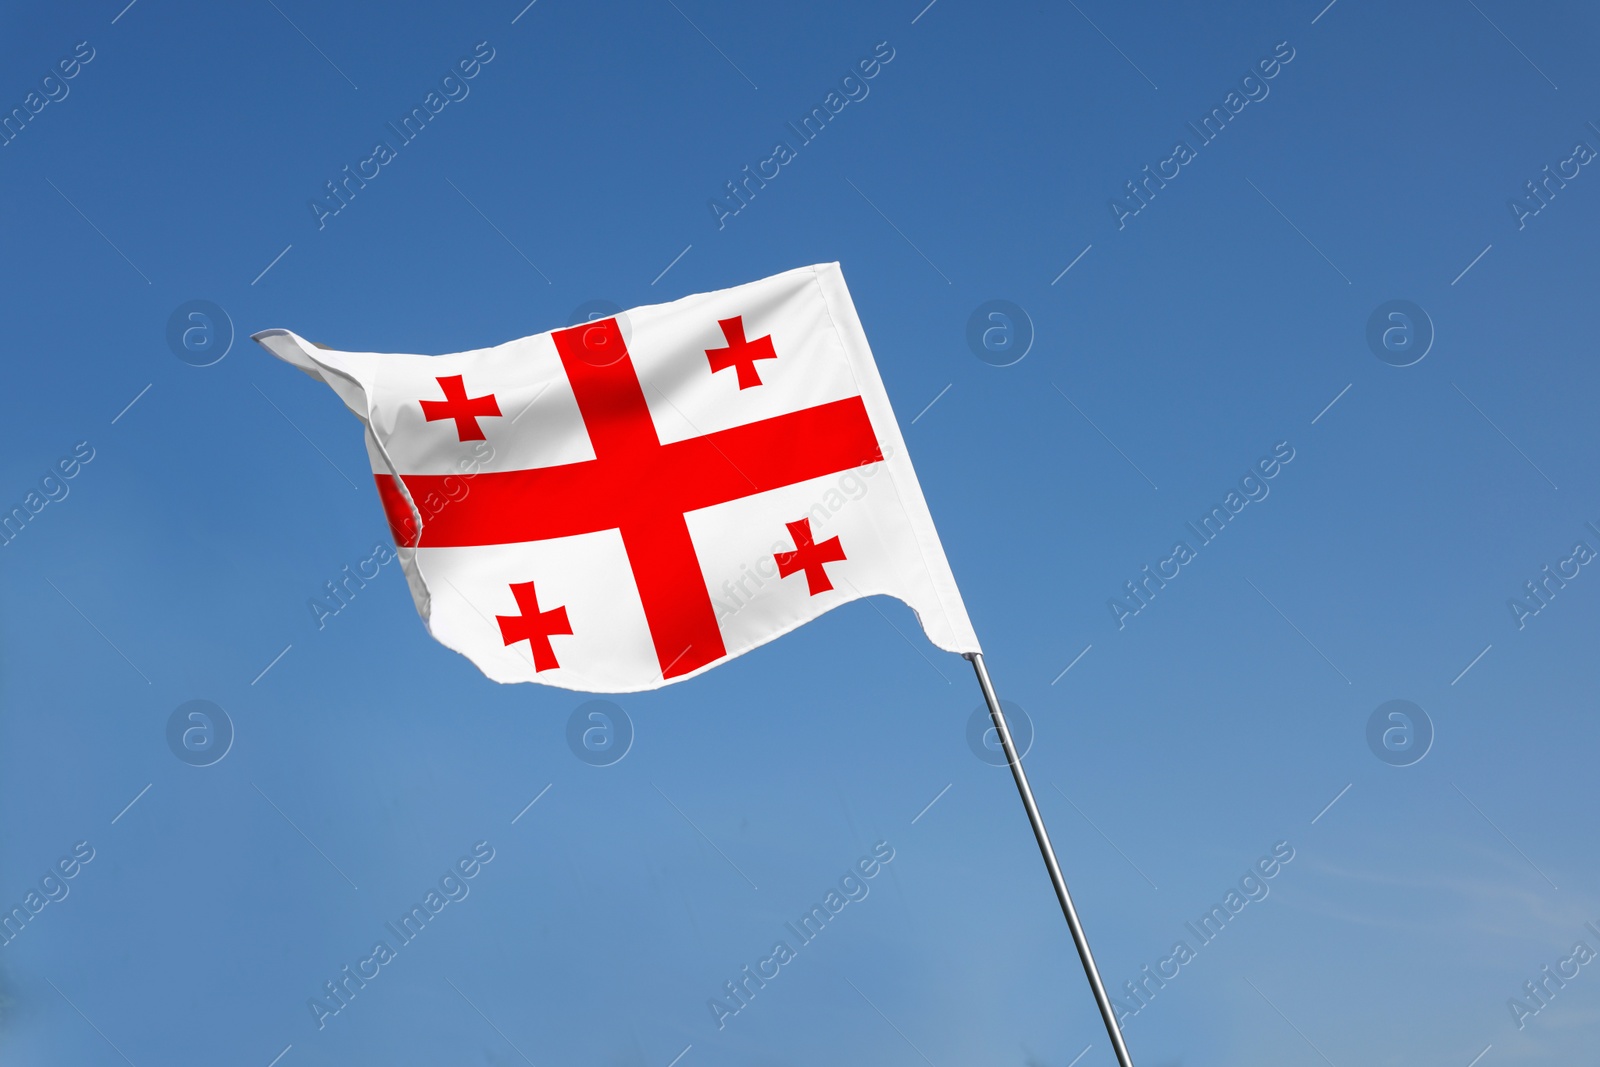 Image of National flag of Georgia against blue sky